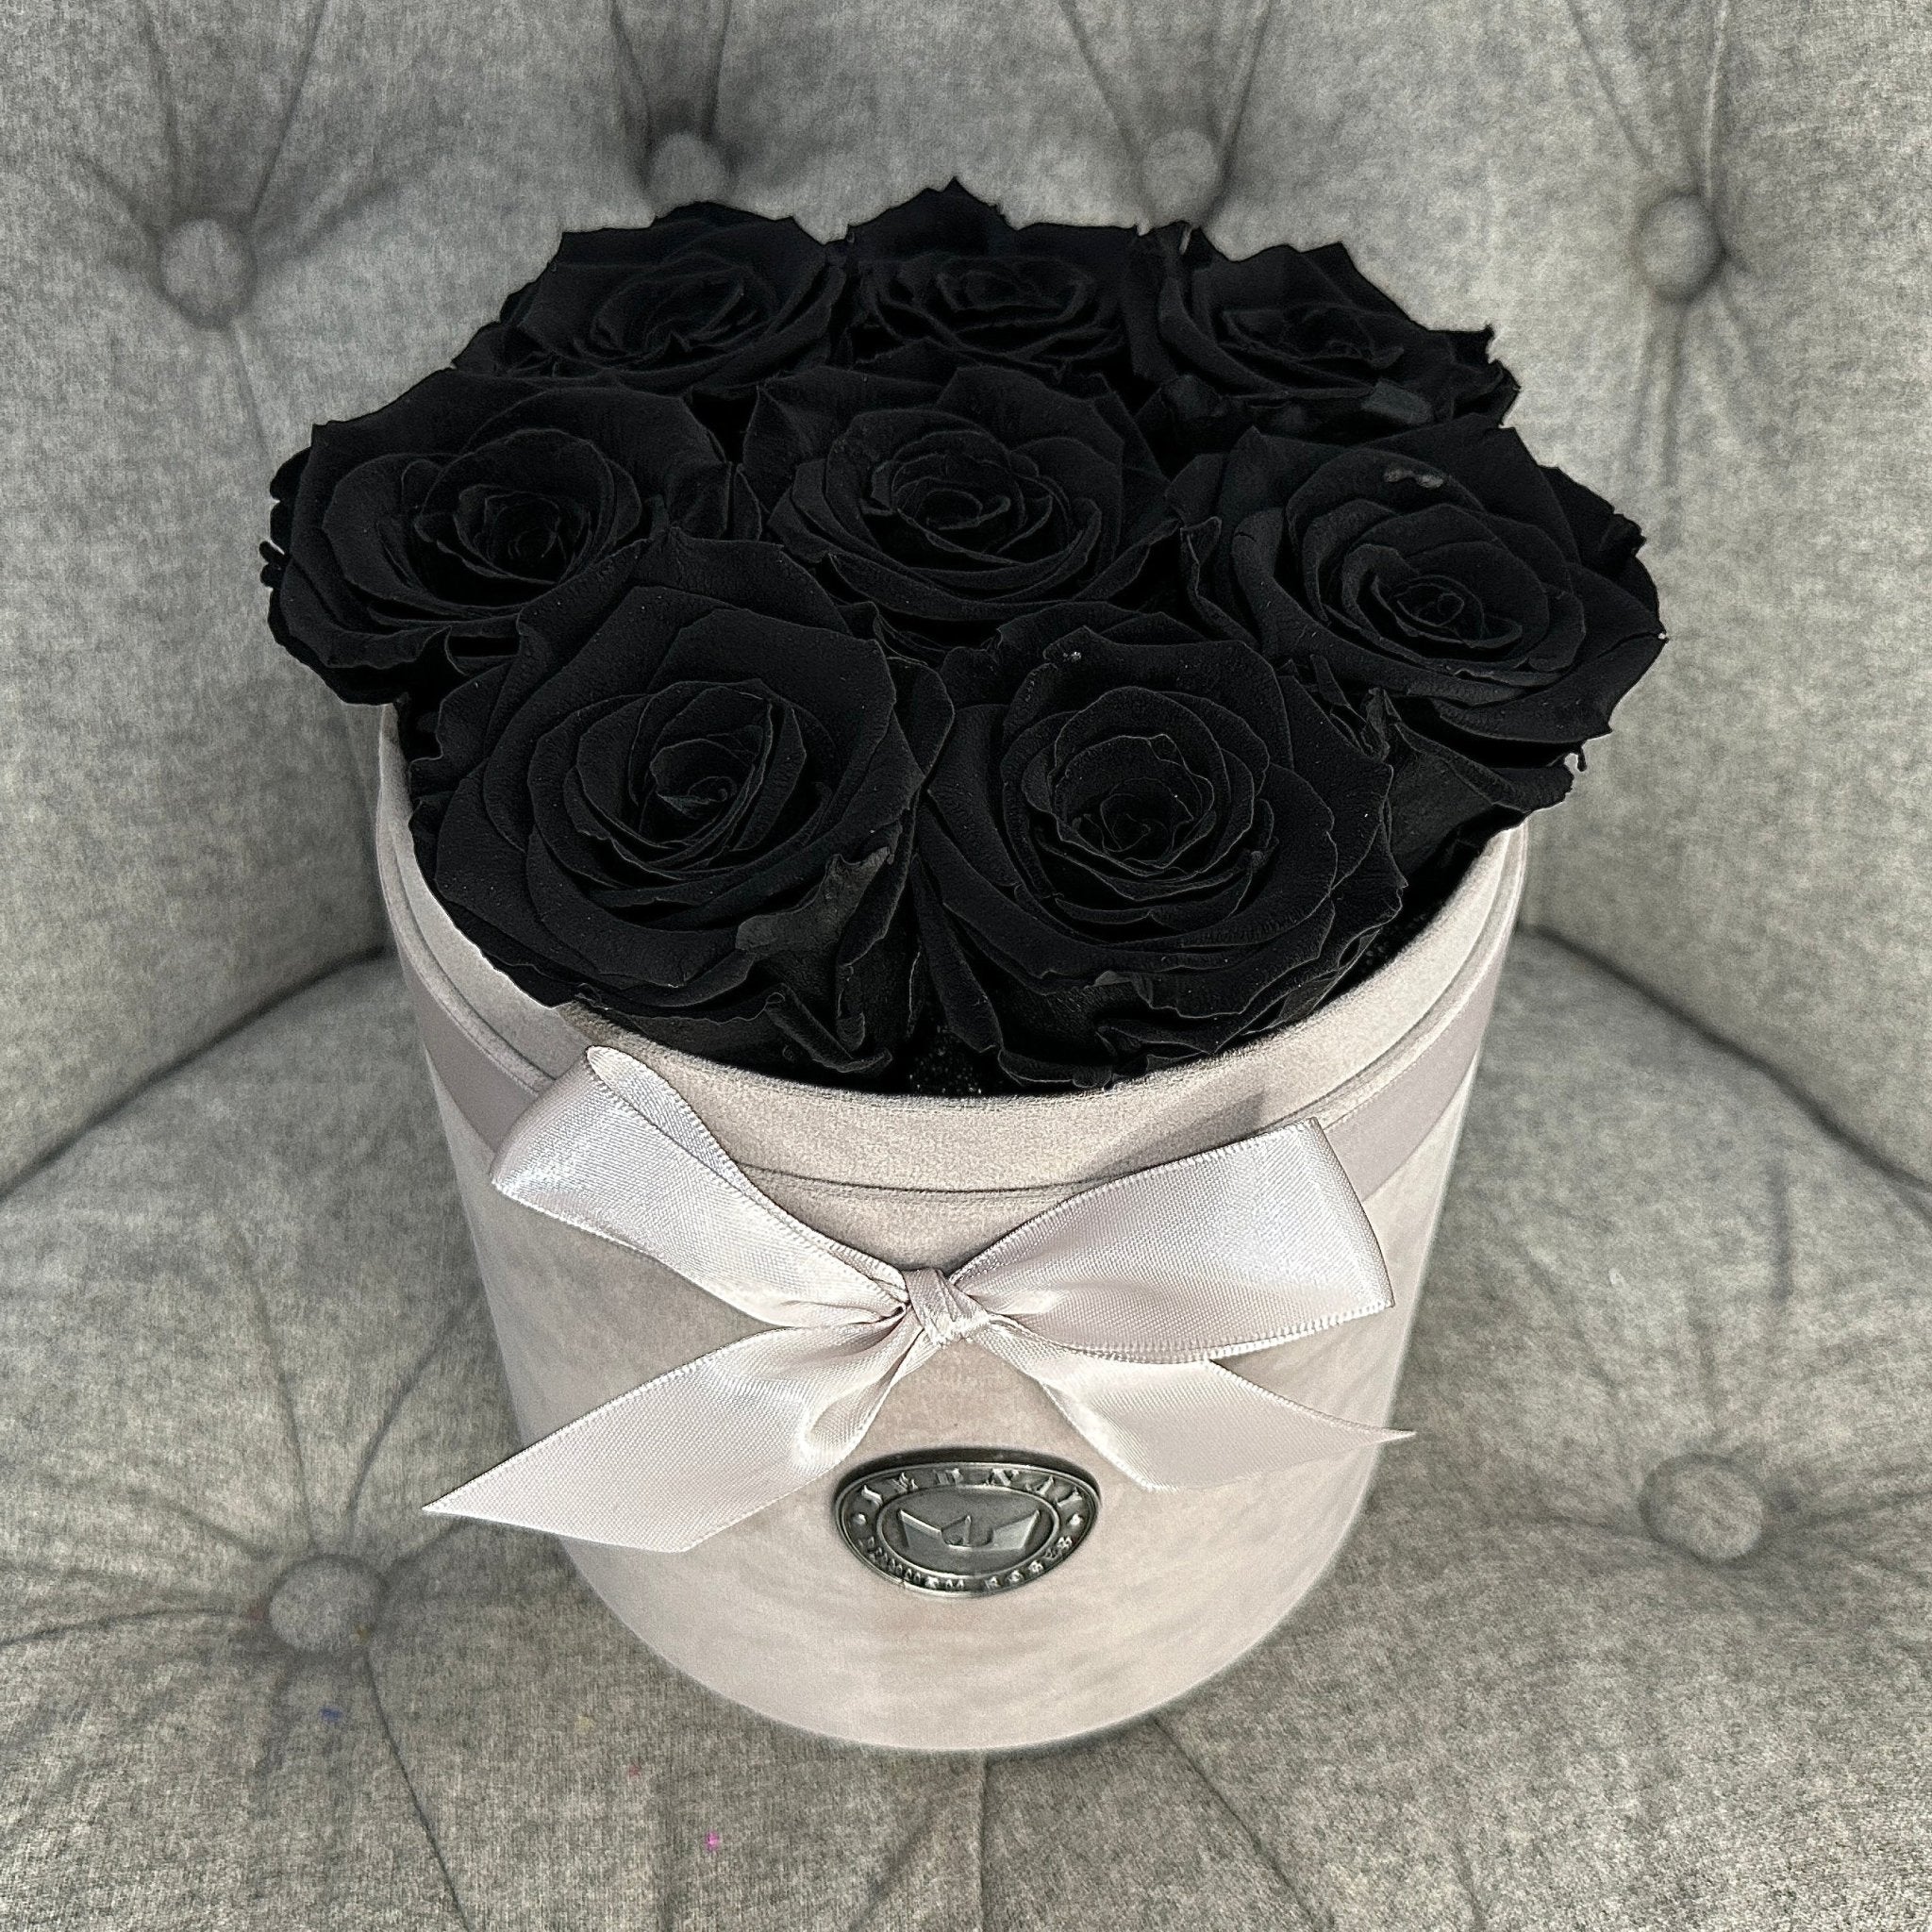 Medium Grey Suede Forever Rose Box - Midnight Black Eternal Roses - Jednay Roses